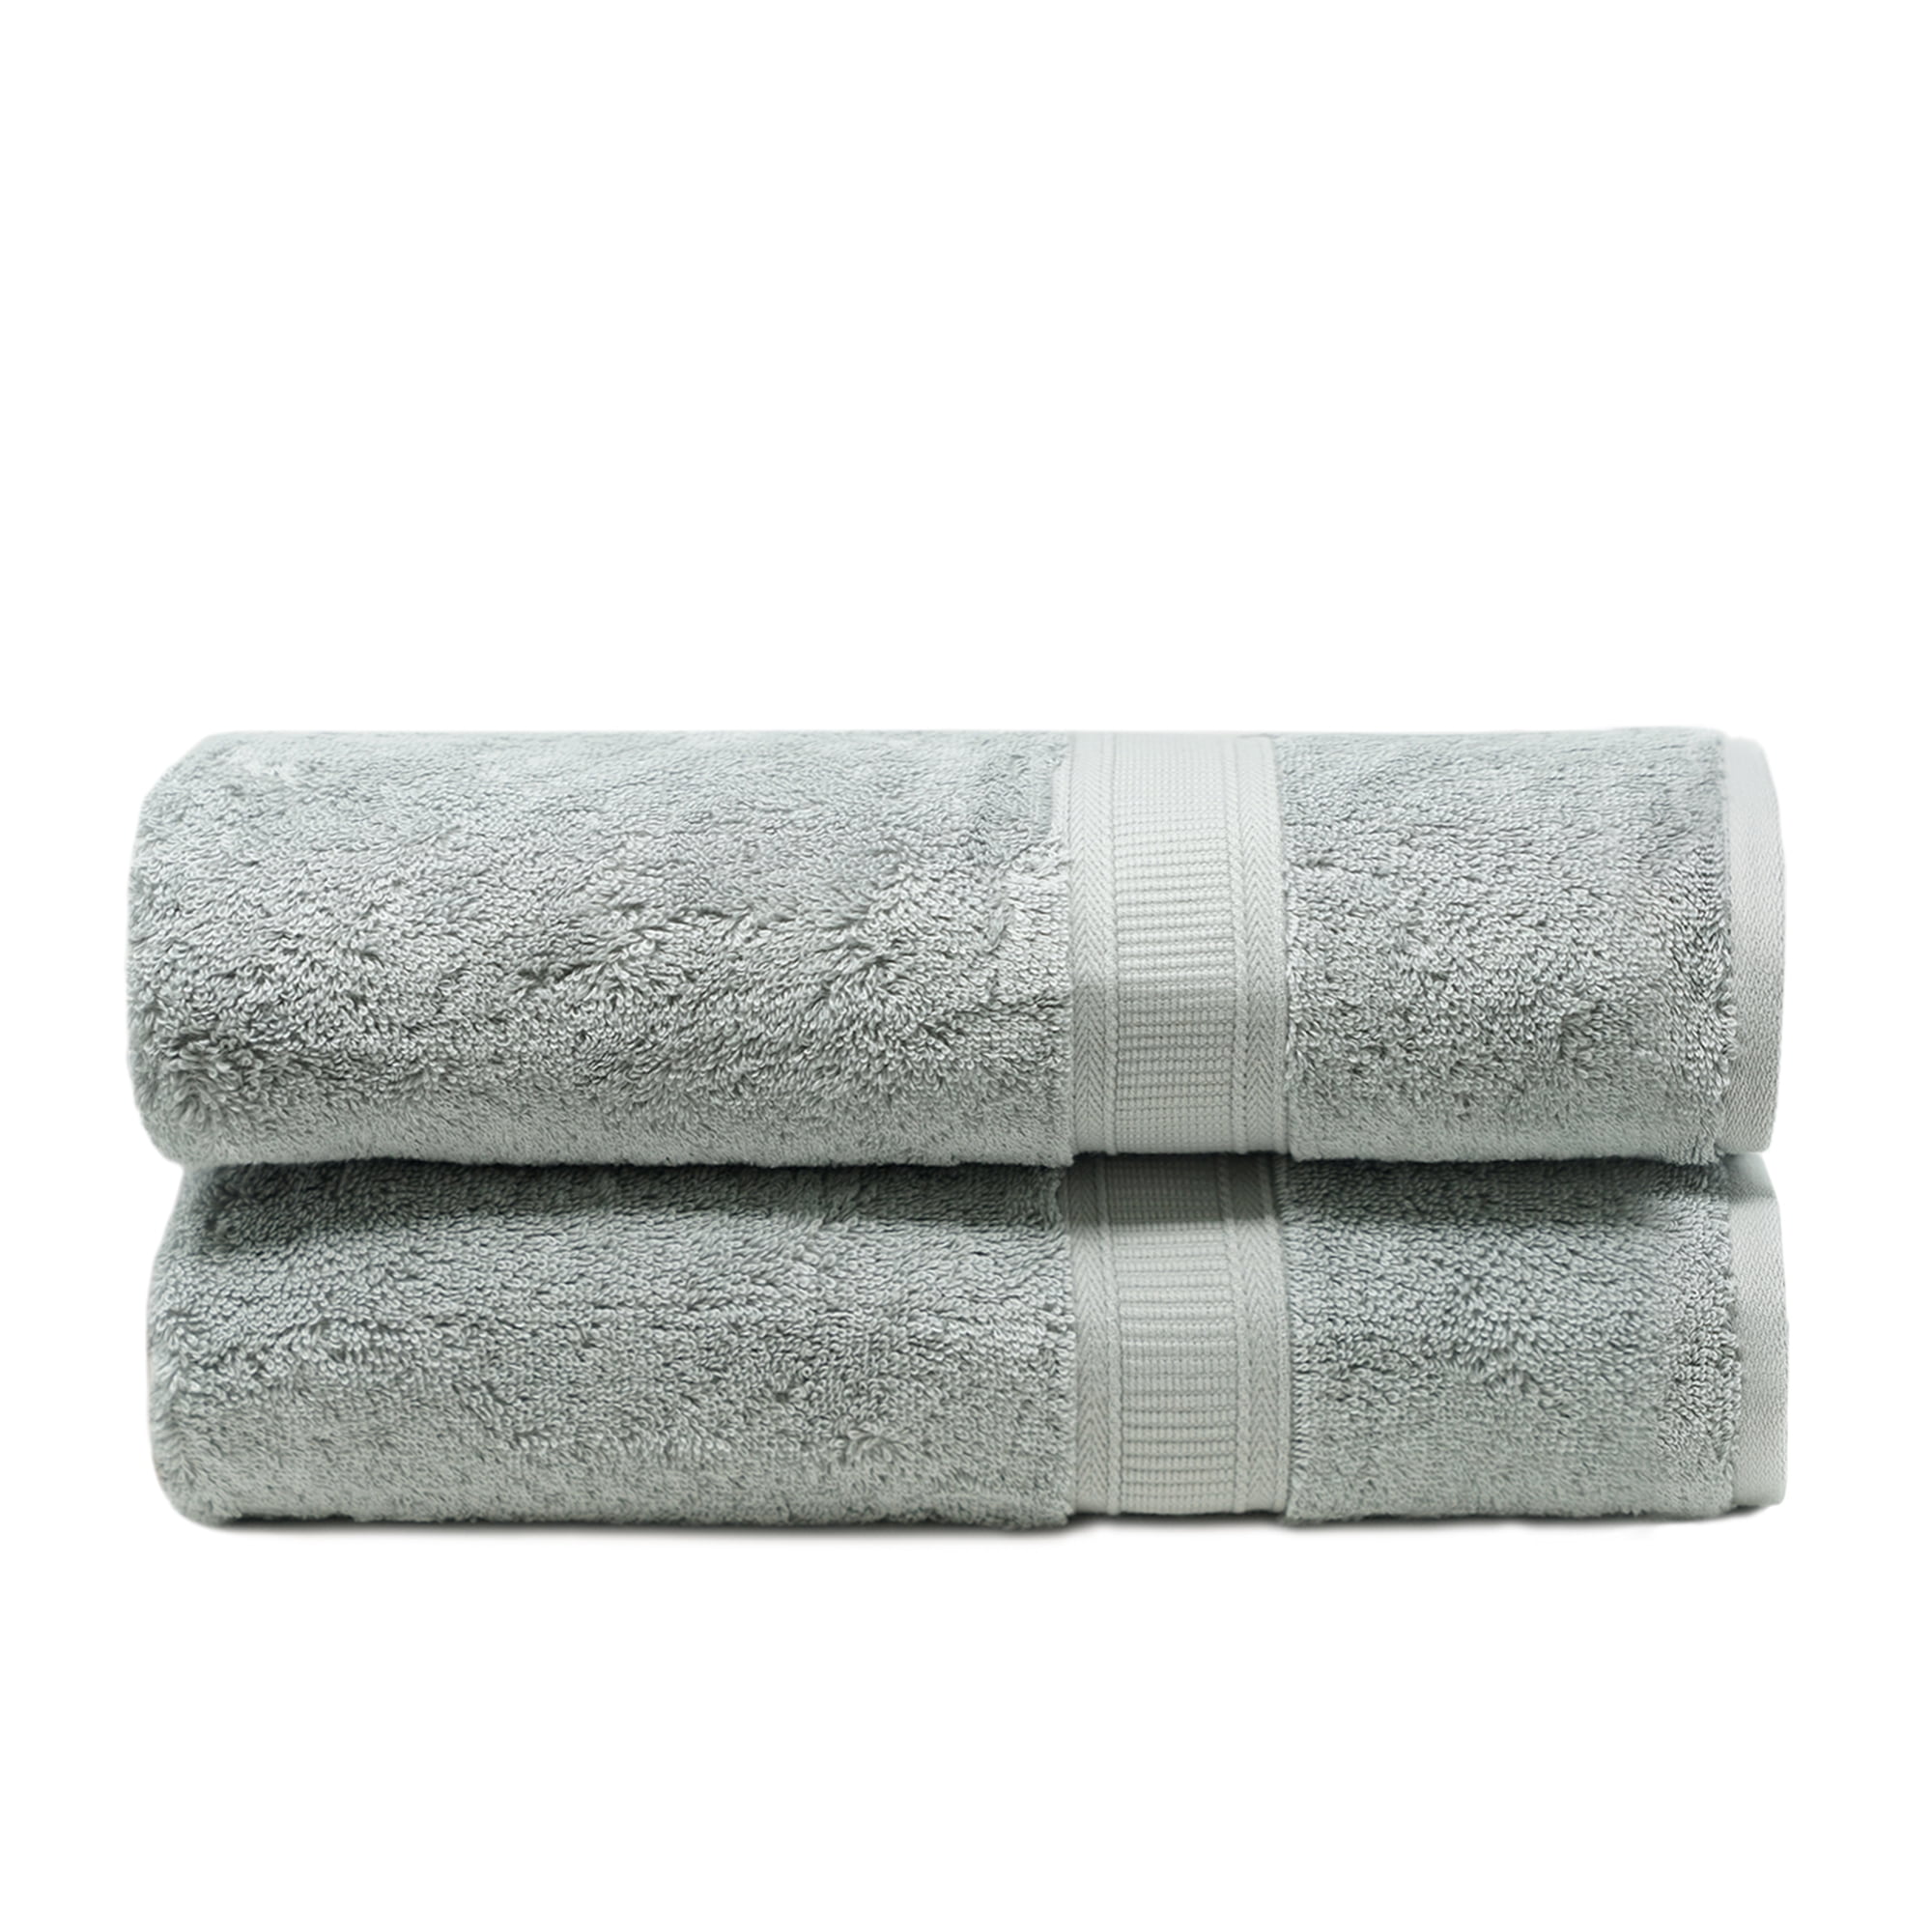 Details about   Bath Towel Set 100% Cotton 500 GSM Iris Blue and Sunshine Yellow